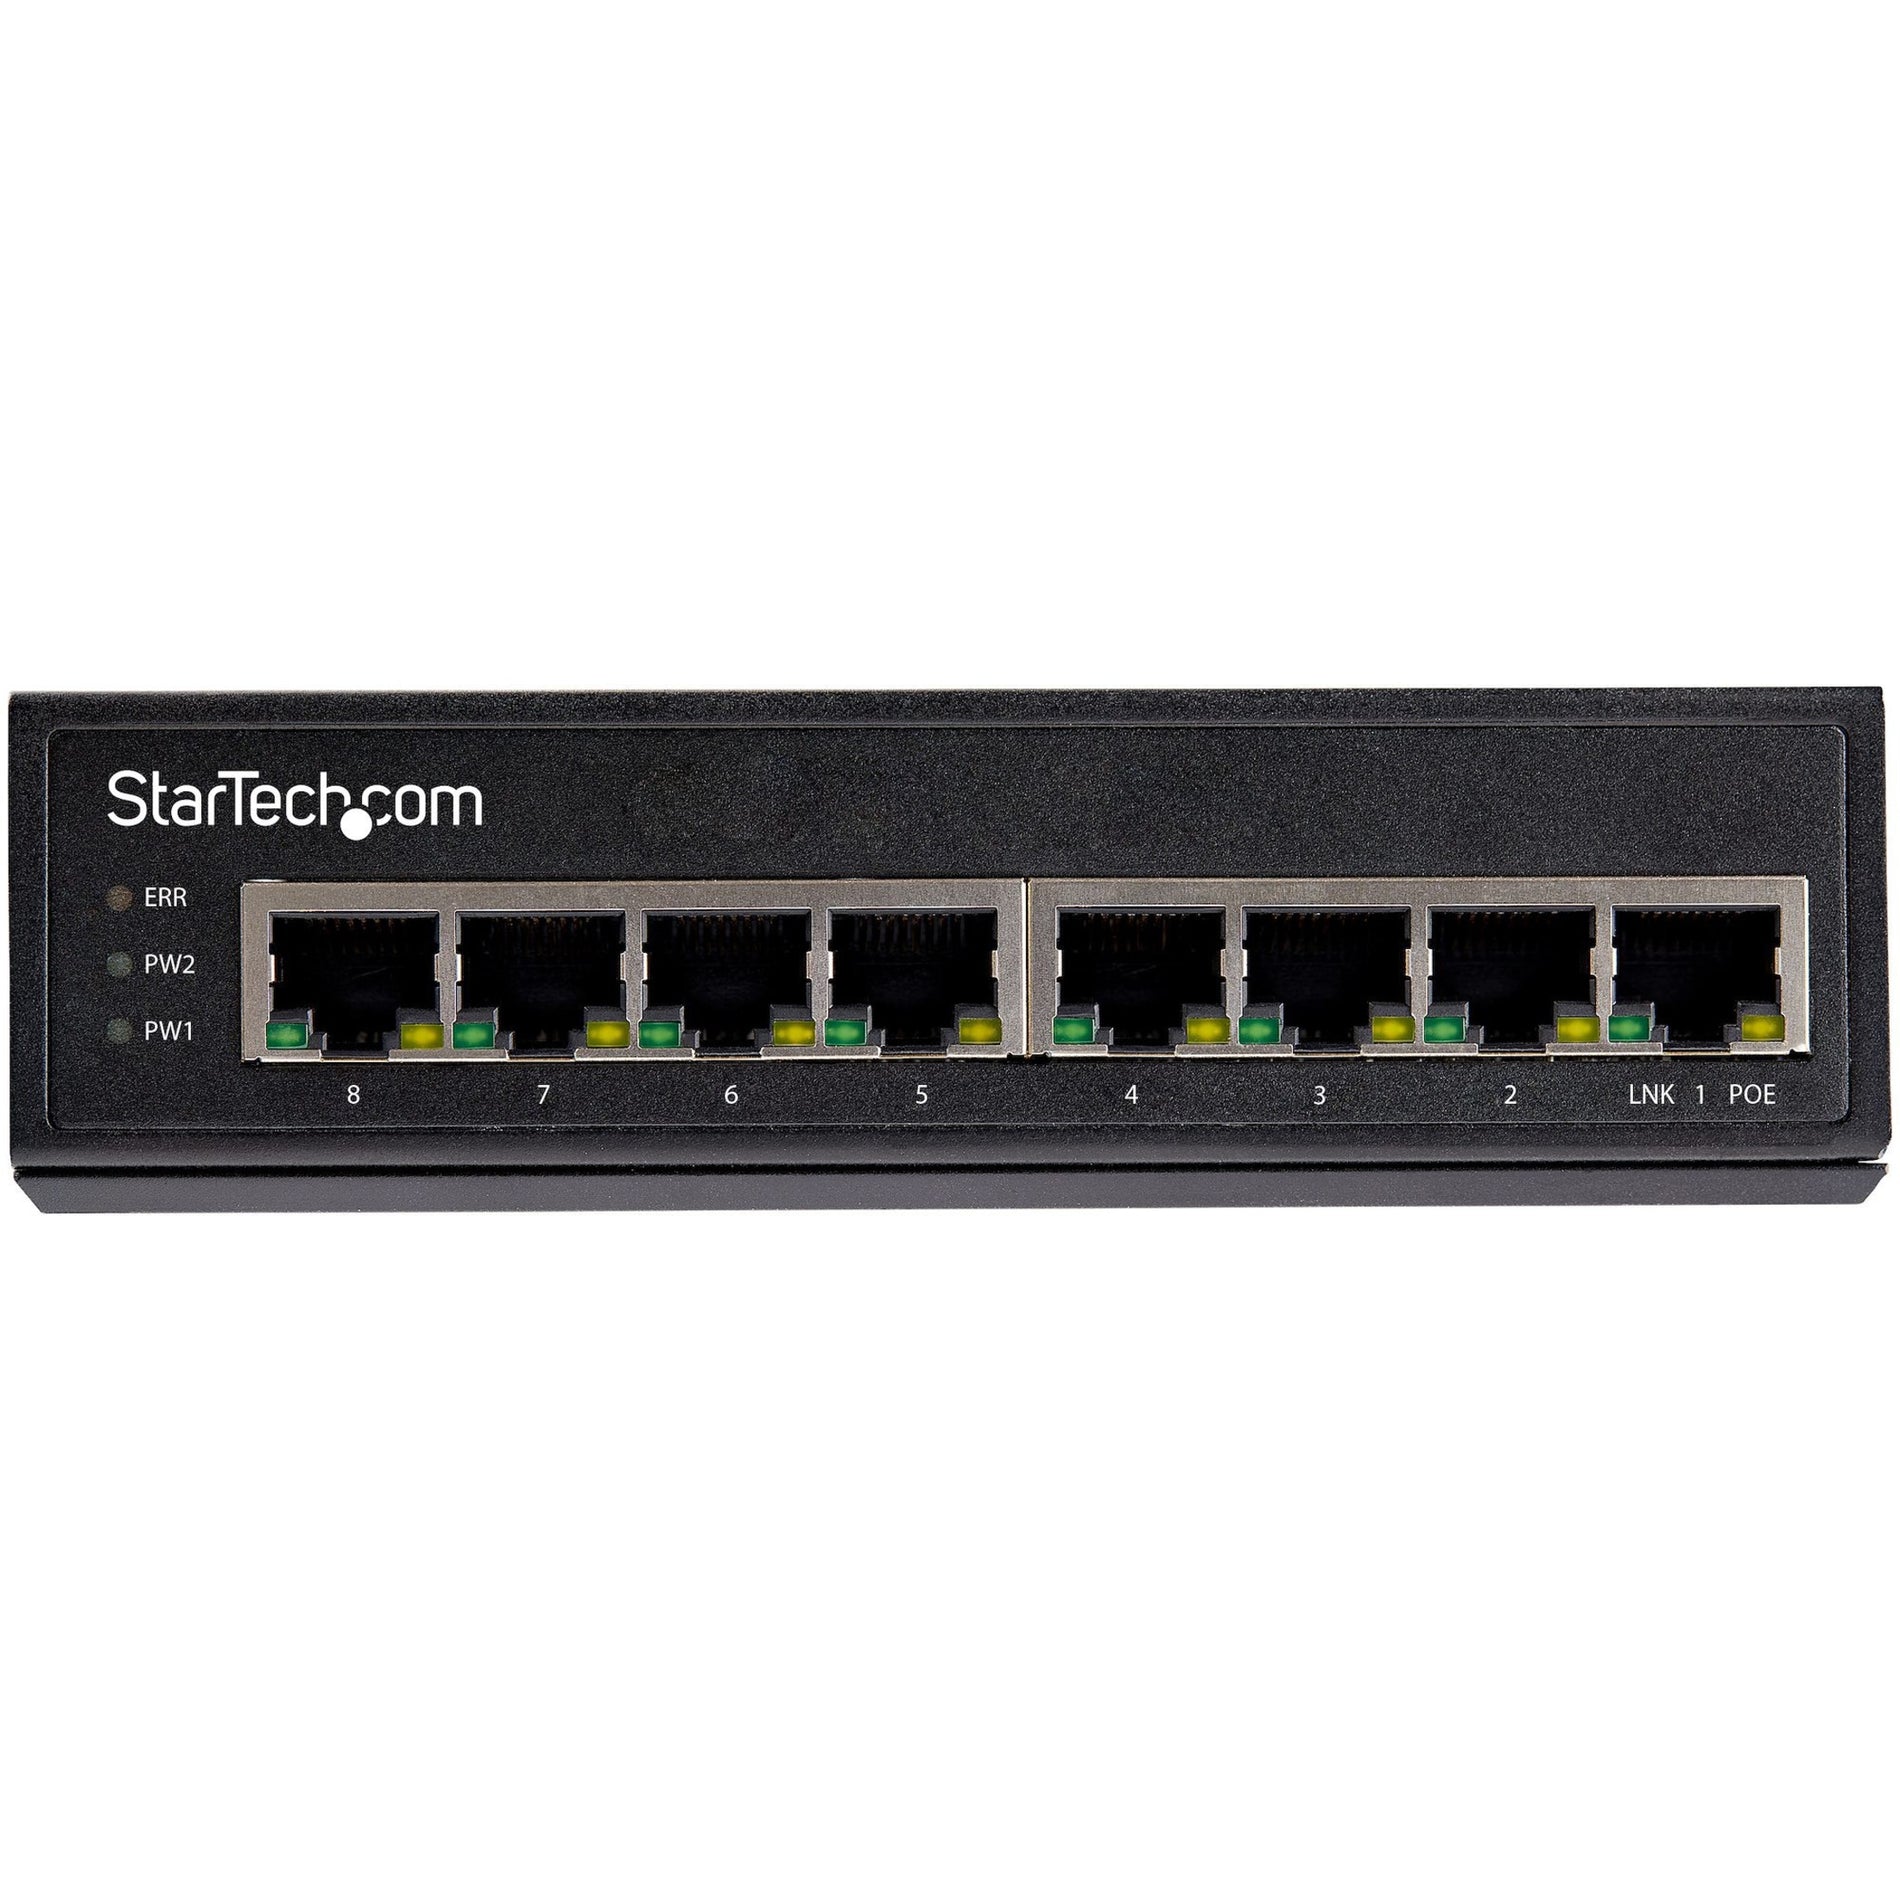 StarTech.com IESC1G80UP Ethernet Switch, 8 x Gigabit Ethernet PoE+, 200W PoE Budget